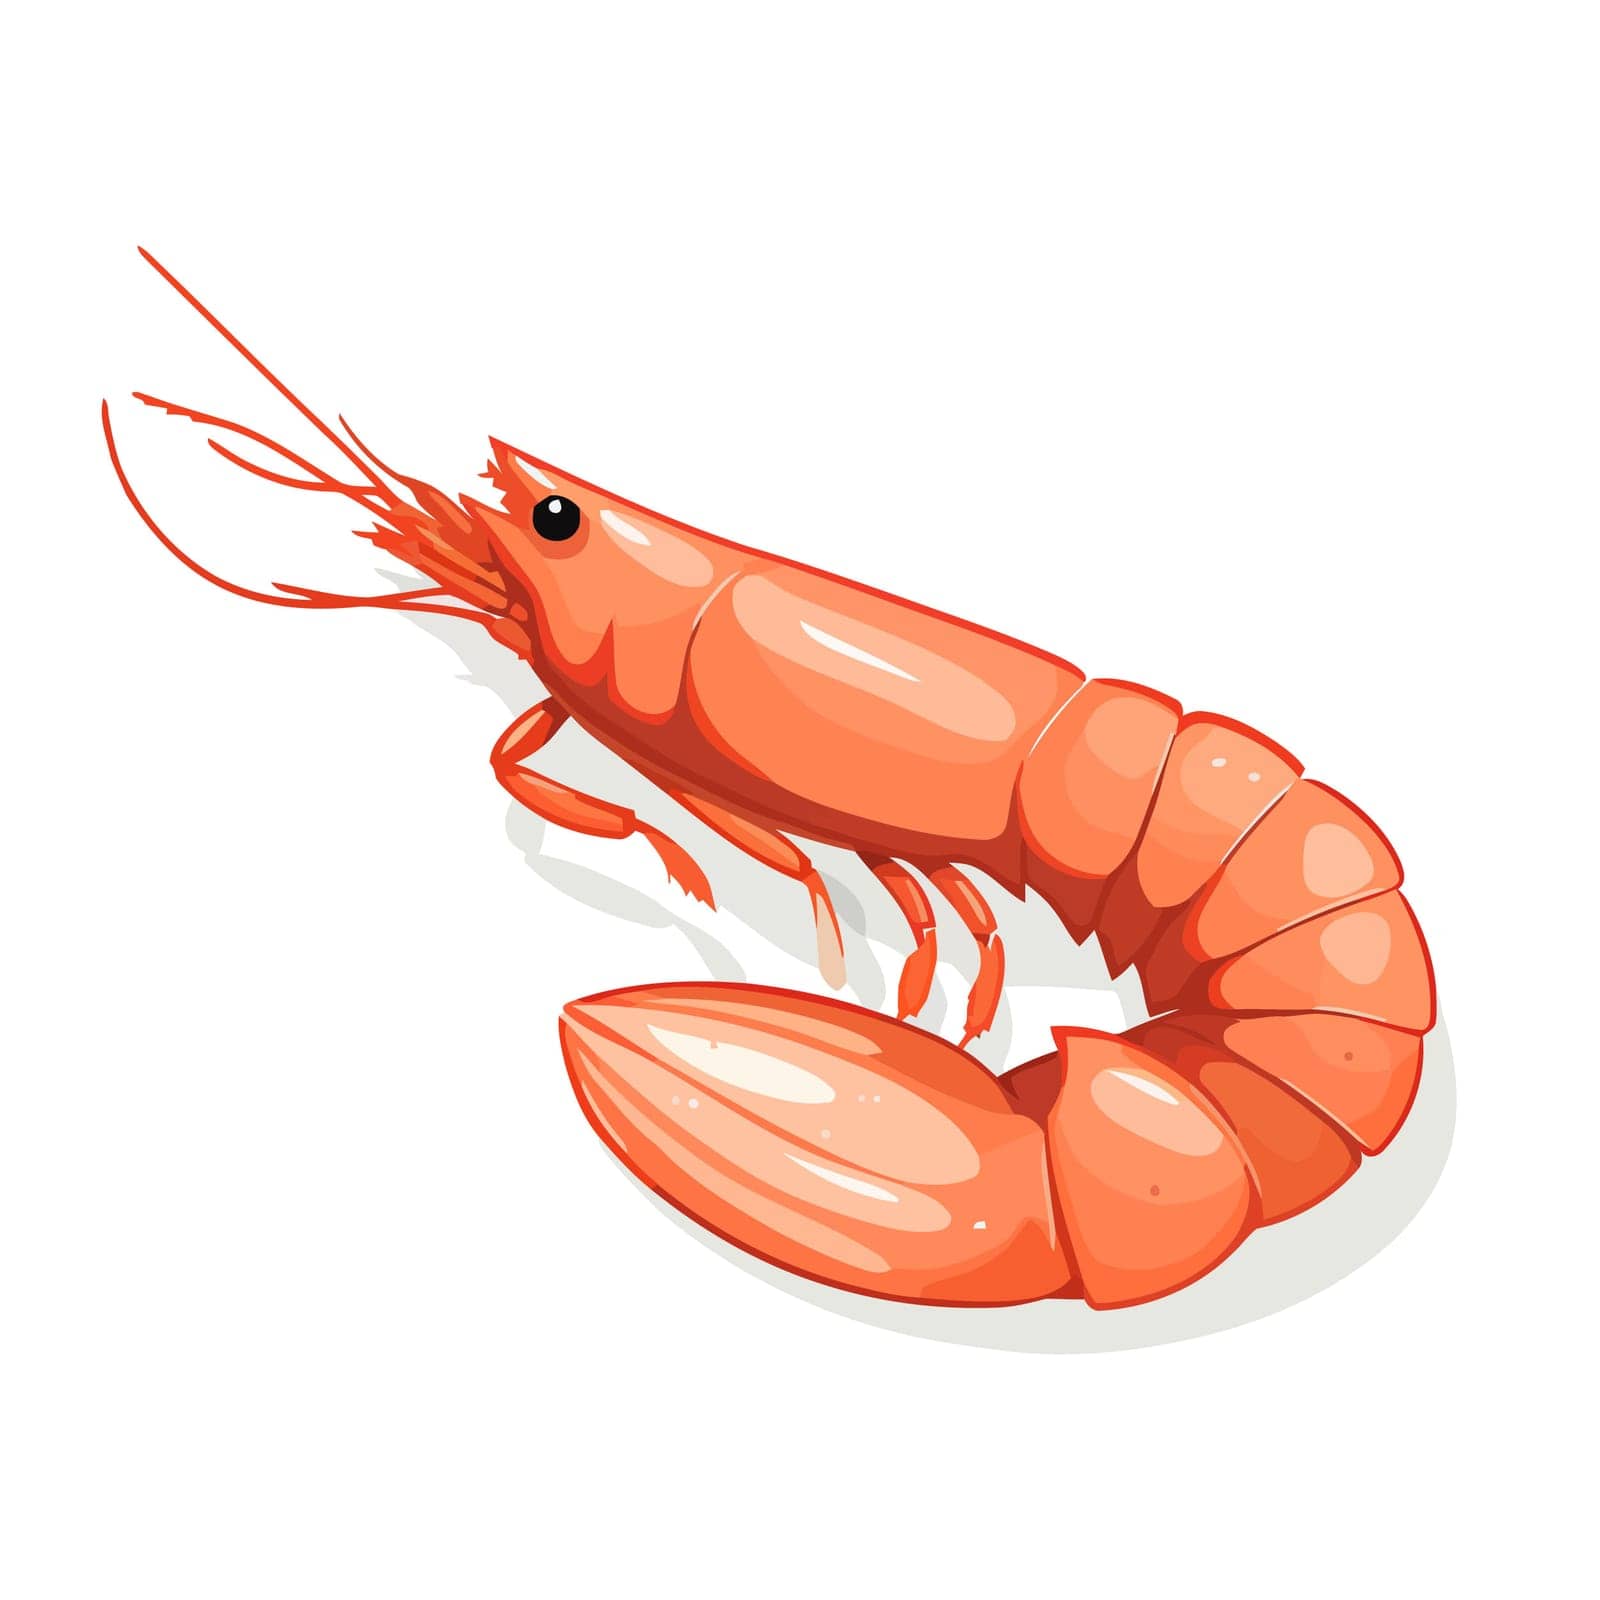 Shrimp image isolated. Shrimp icon. Cute red prawn in flat design. Vector illustration